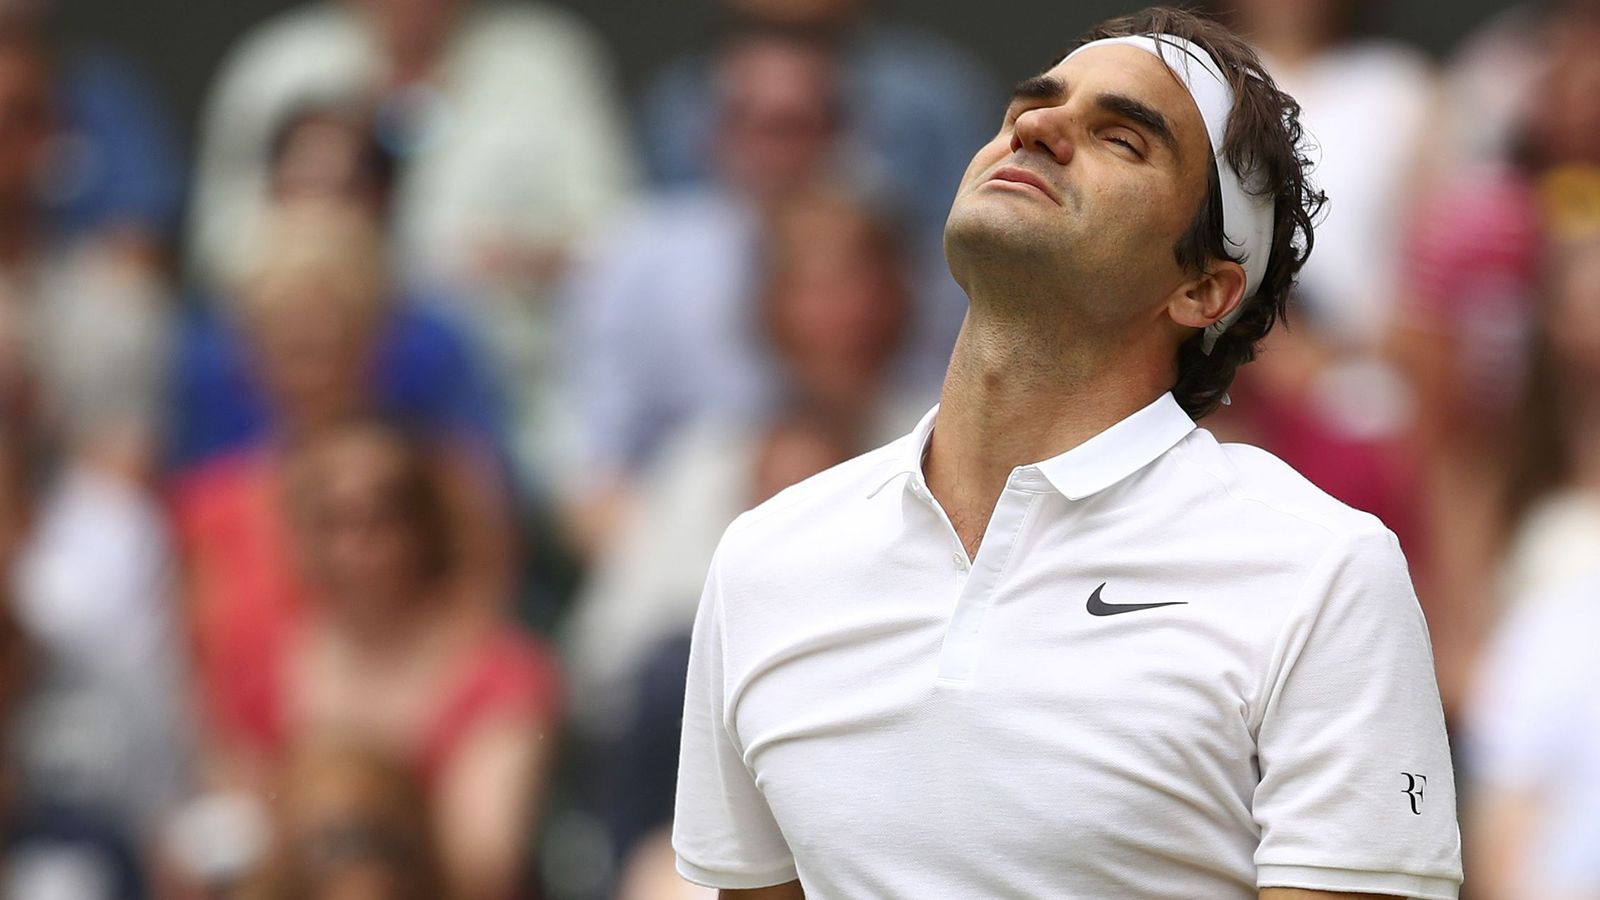 Foto: Federer no volverá a jugar en 2016 (Clive Brunskill/Reuters)